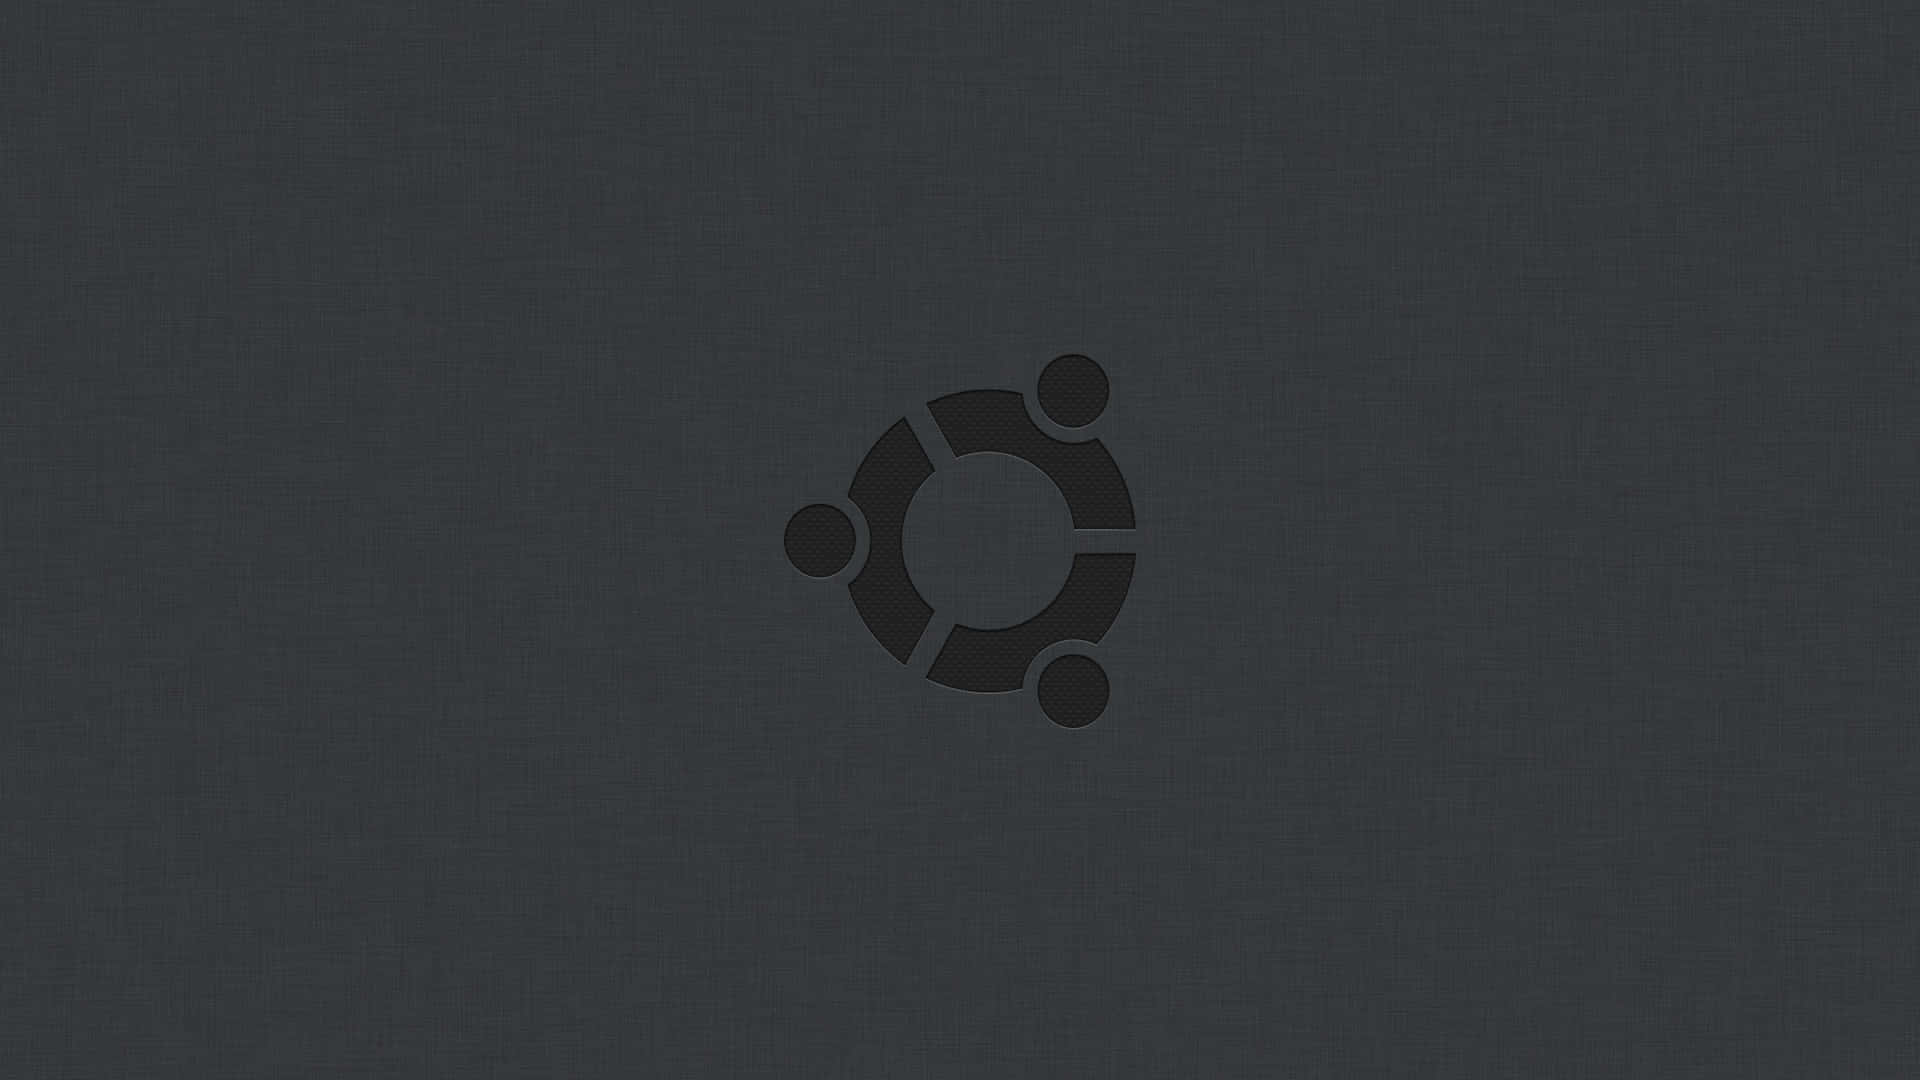 Ubuntu 3840 X 2160 Wallpaper